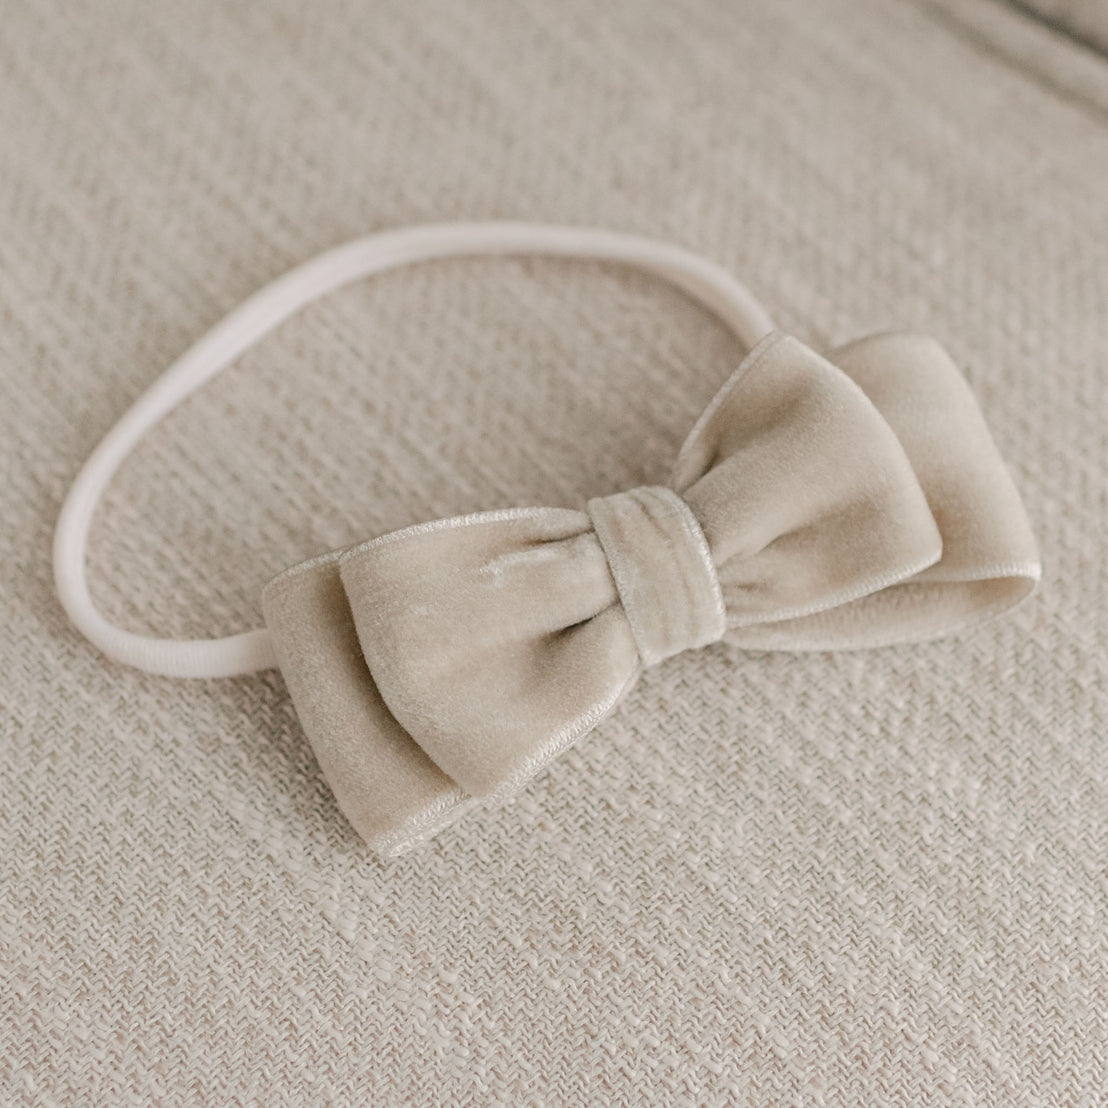 A Rose Velvet Bow Headband on a textured woven fabric surface.